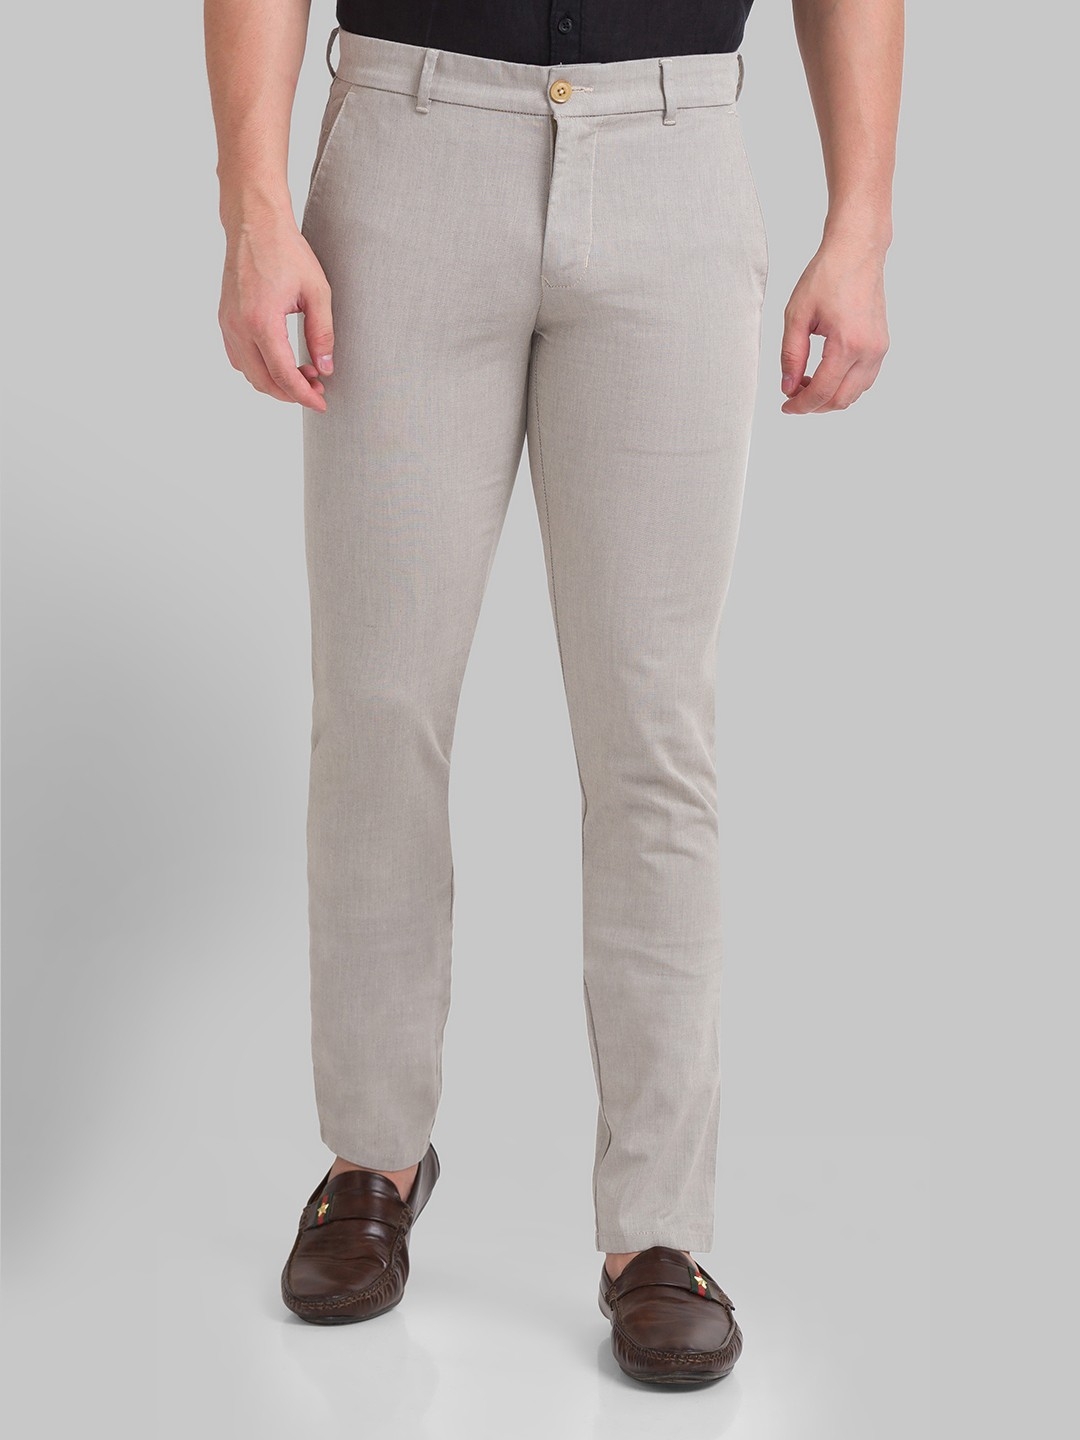 PARX Grey Trouser